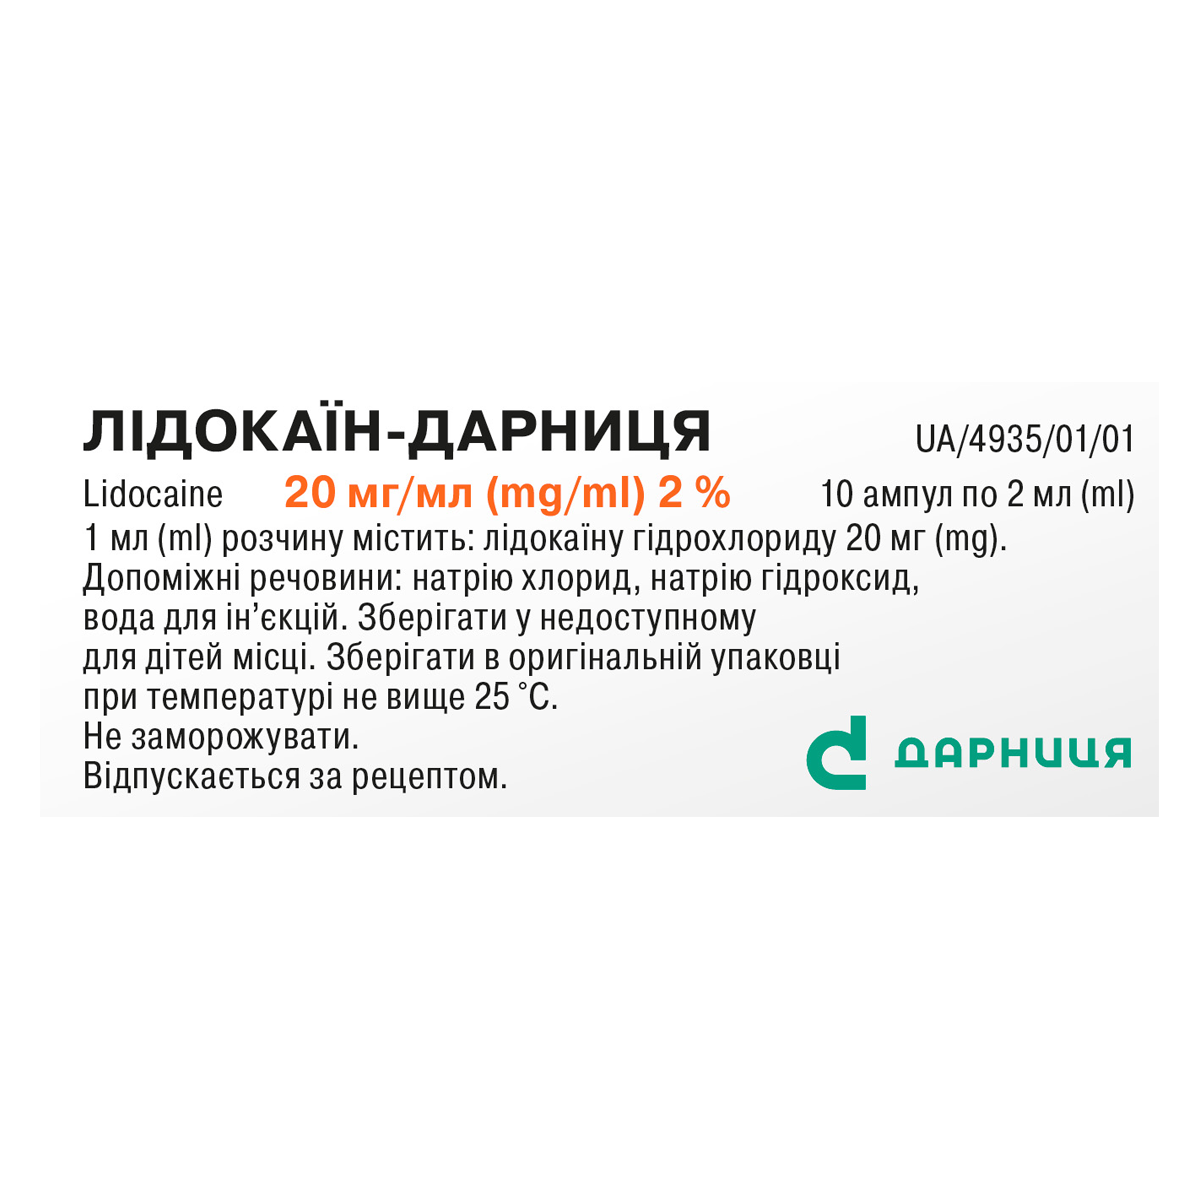 Lidocaine-Darnitsa manufacturer "Darnytsia" pharmaceutical company